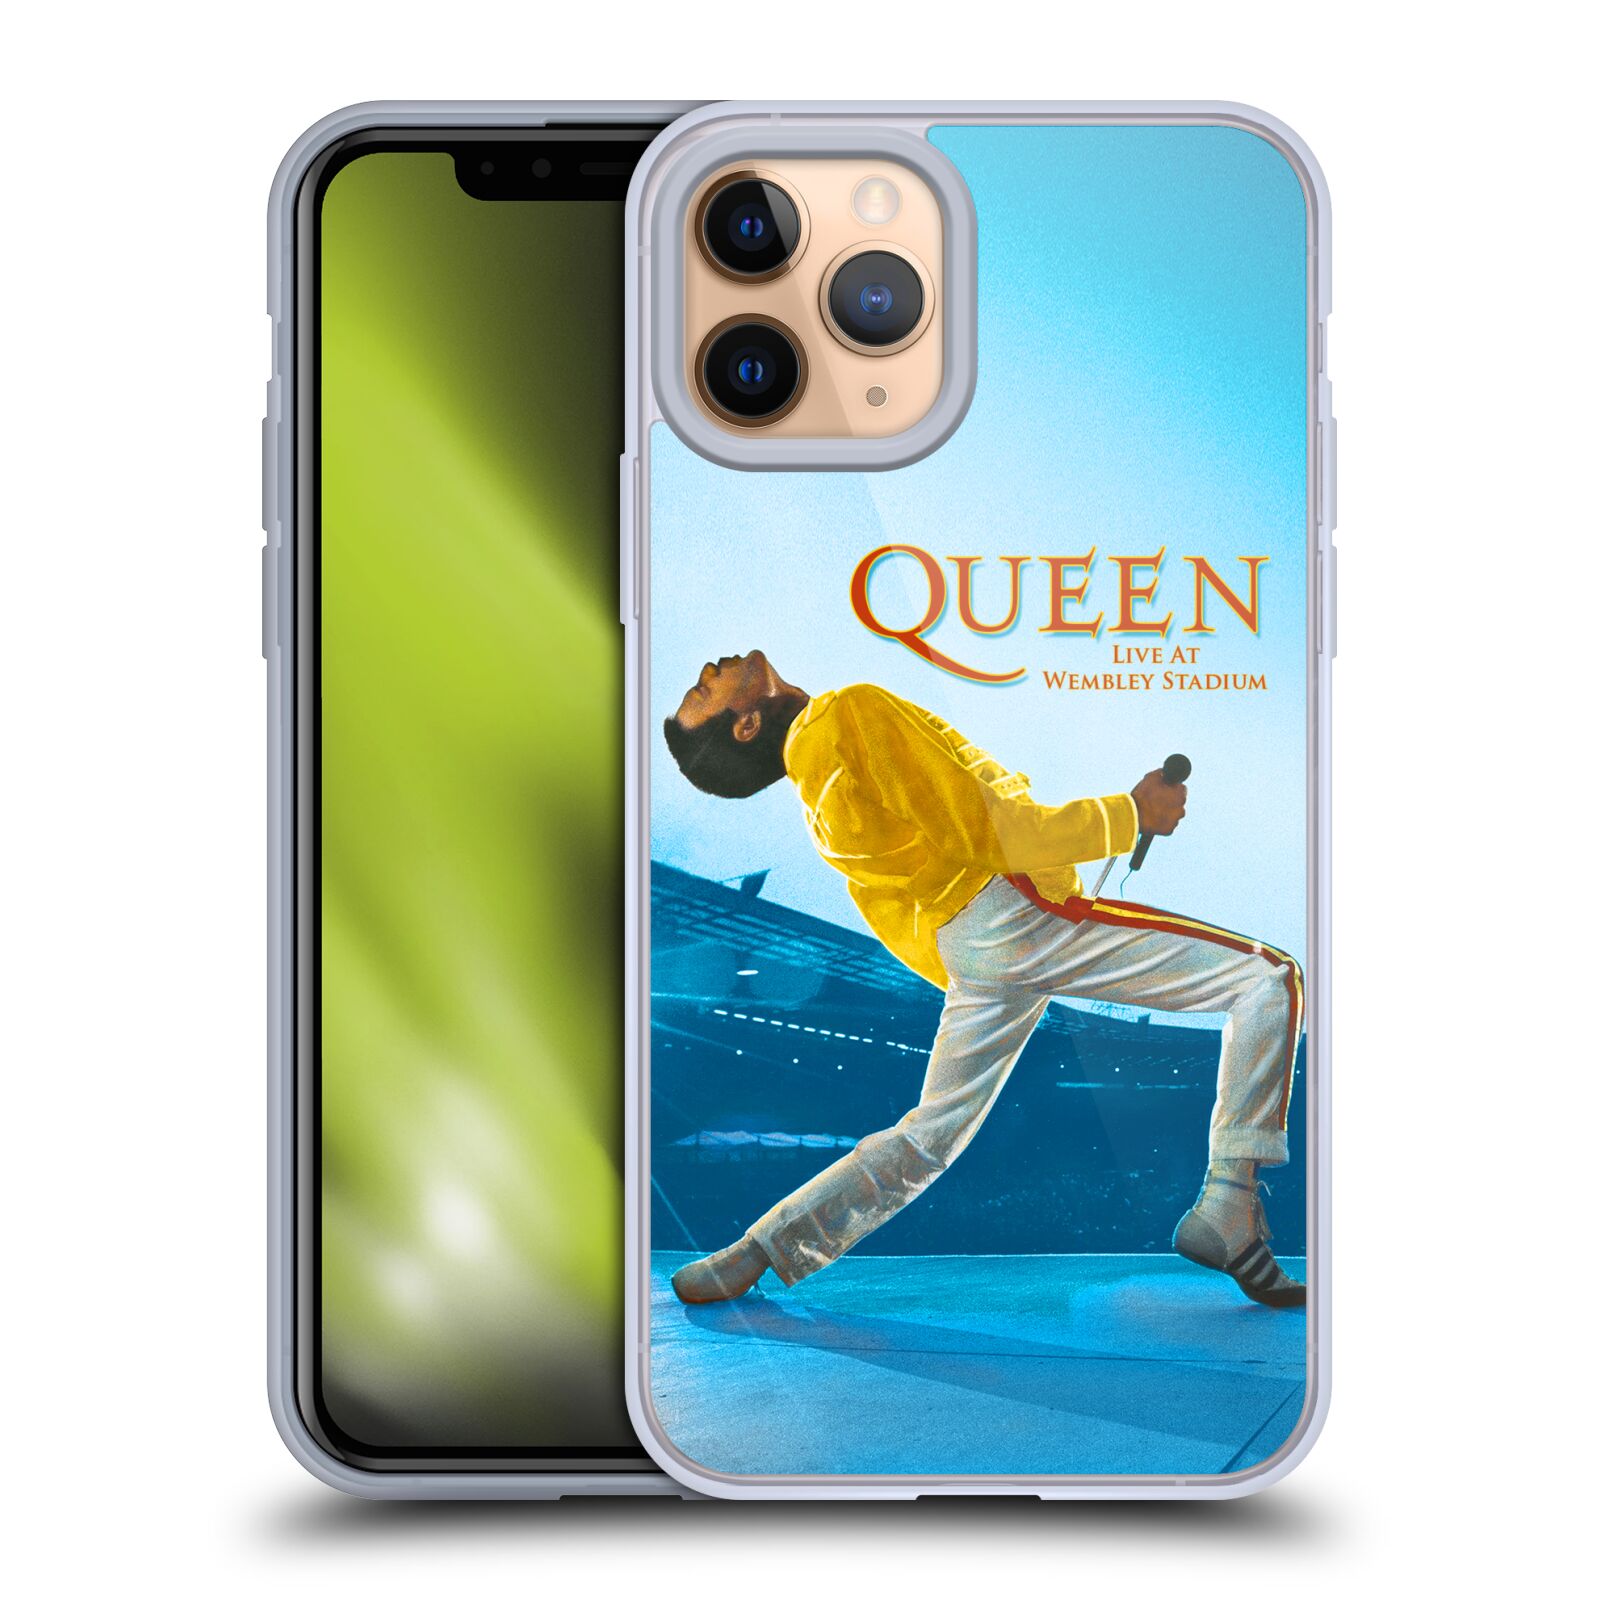 Silikonové pouzdro na mobil Apple iPhone 11 Pro - Head Case - Queen - Freddie Mercury (Silikonový kryt, obal, pouzdro na mobilní telefon Apple iPhone 11 Pro s displejem 5,8" s motivem Queen - Freddie Mercury)